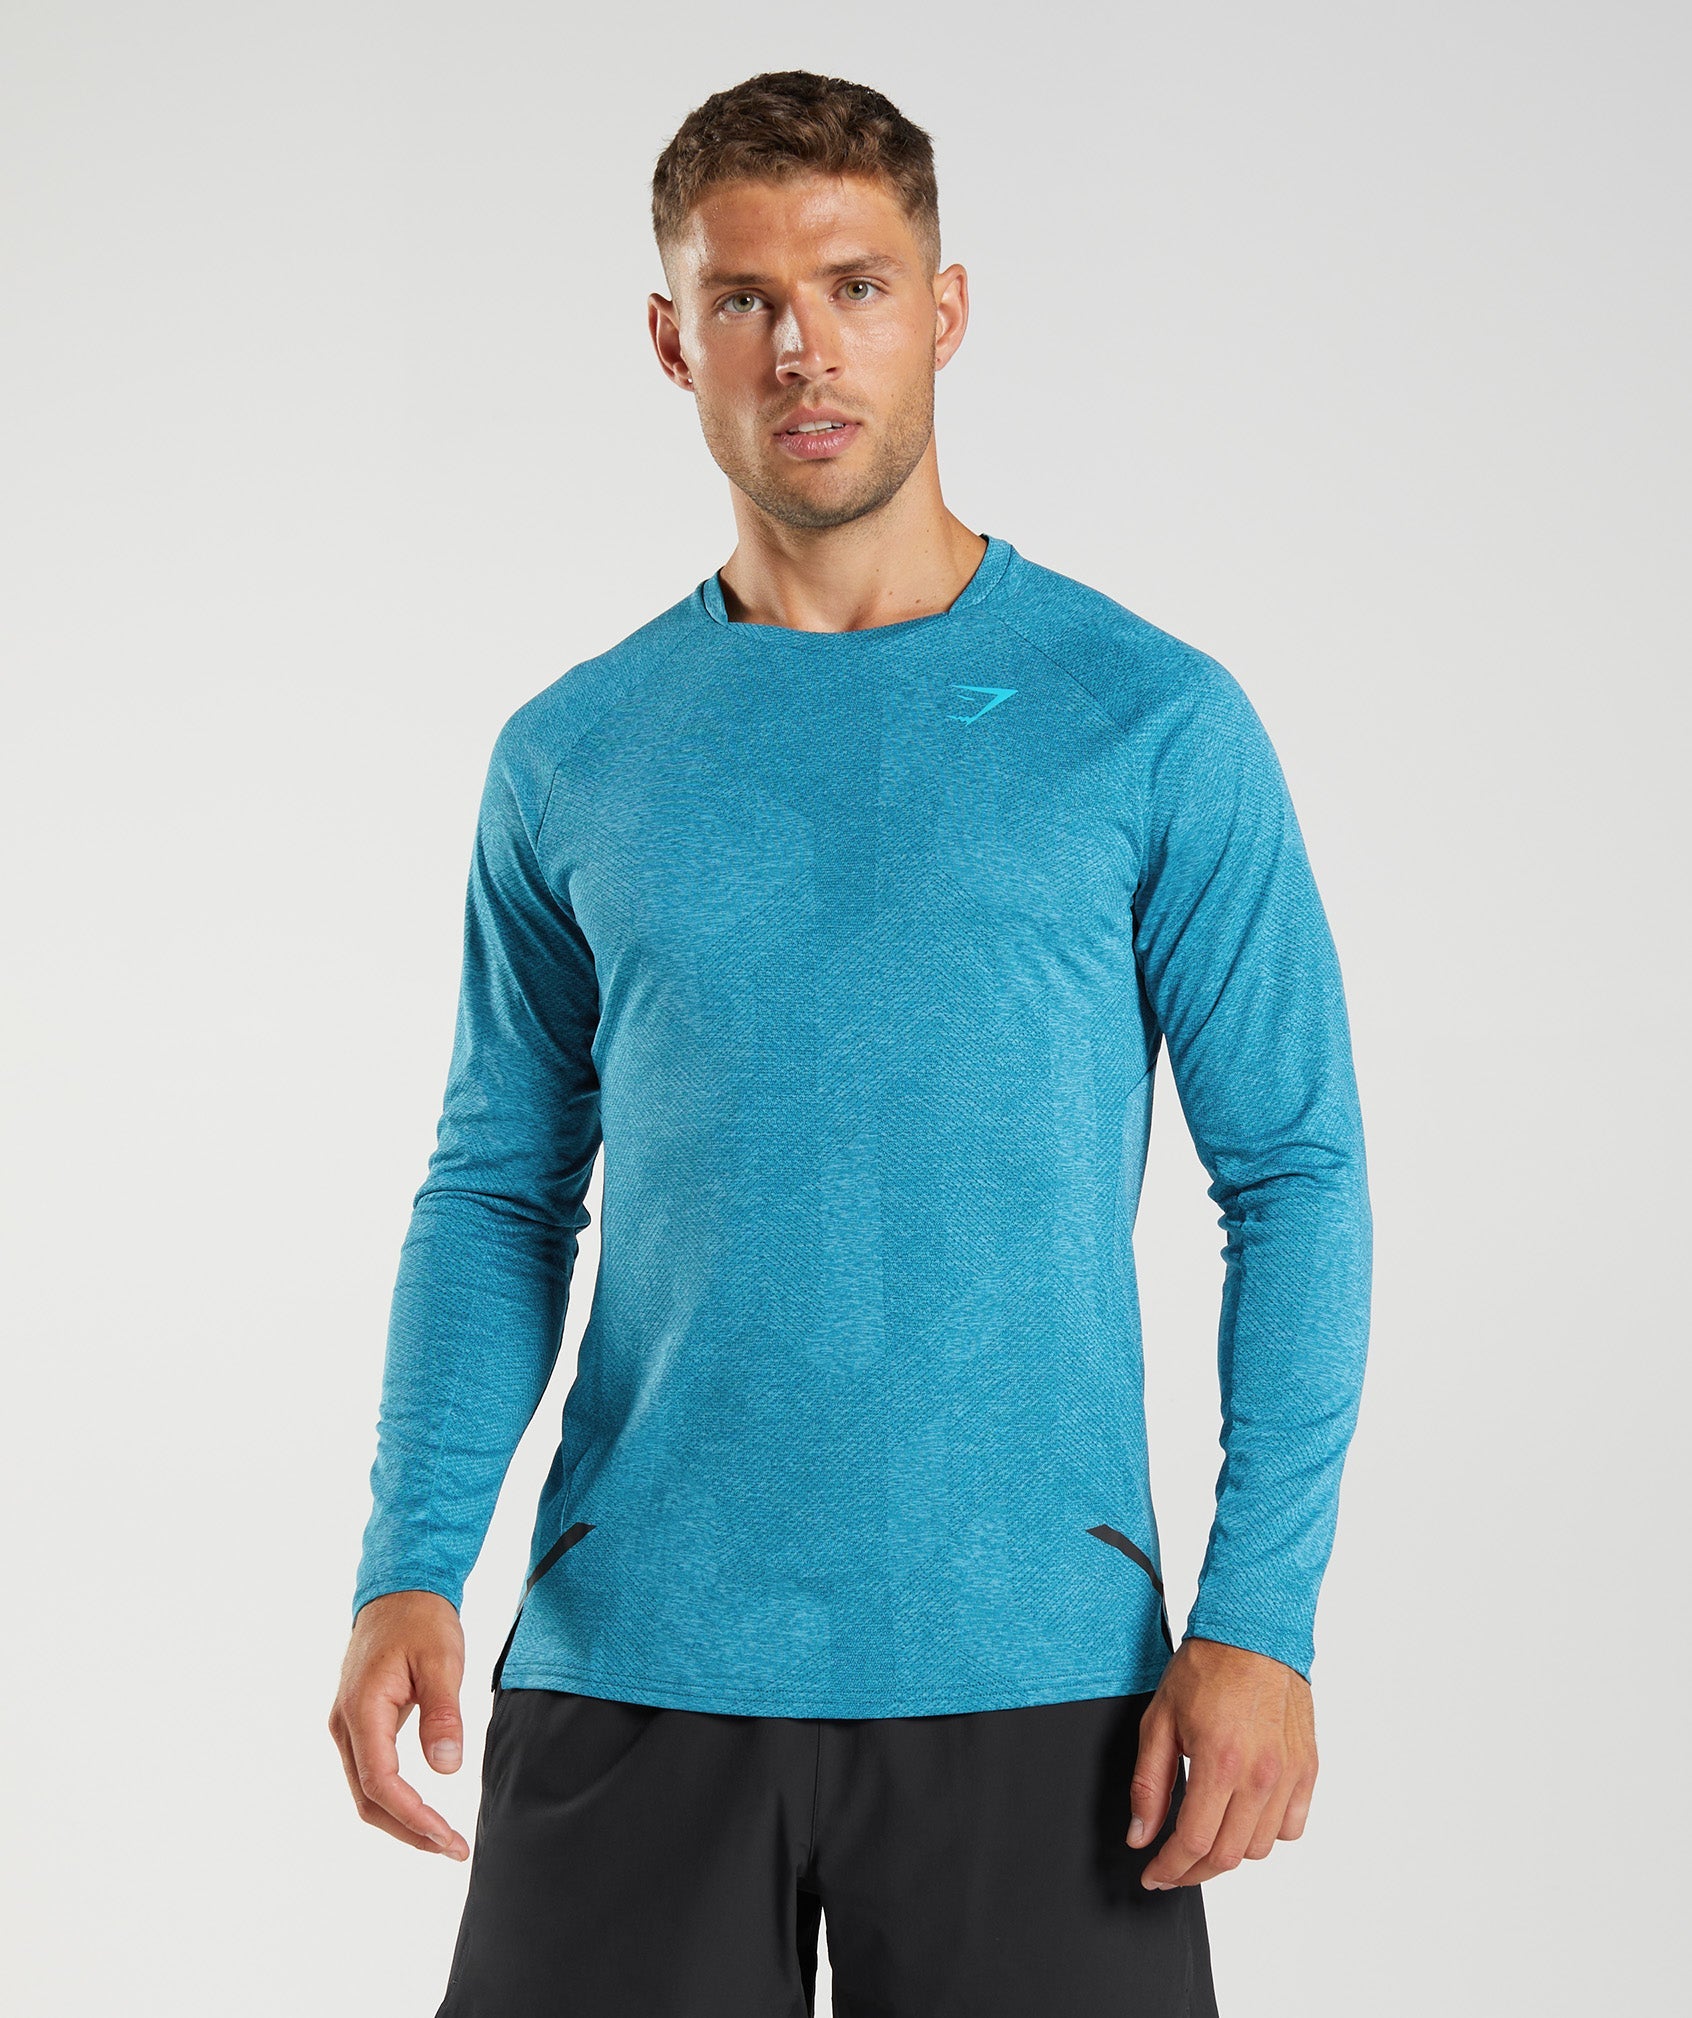 Gymshark Apex Long Sleeve T-Shirt - Atlantic Blue/Shark Blue